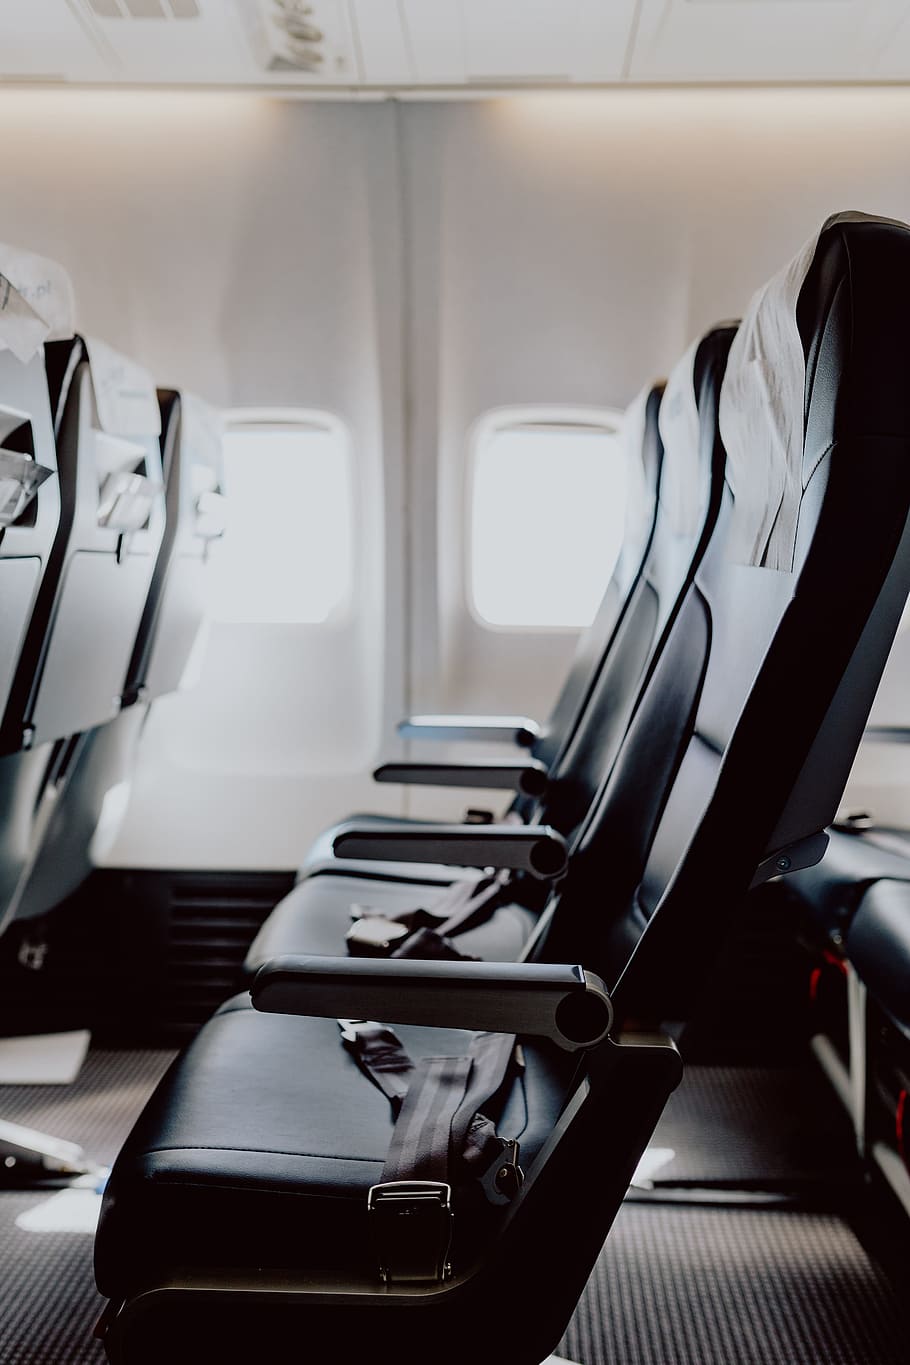 Interior of the passenger airplane, travel, seat, flight, aeroplane